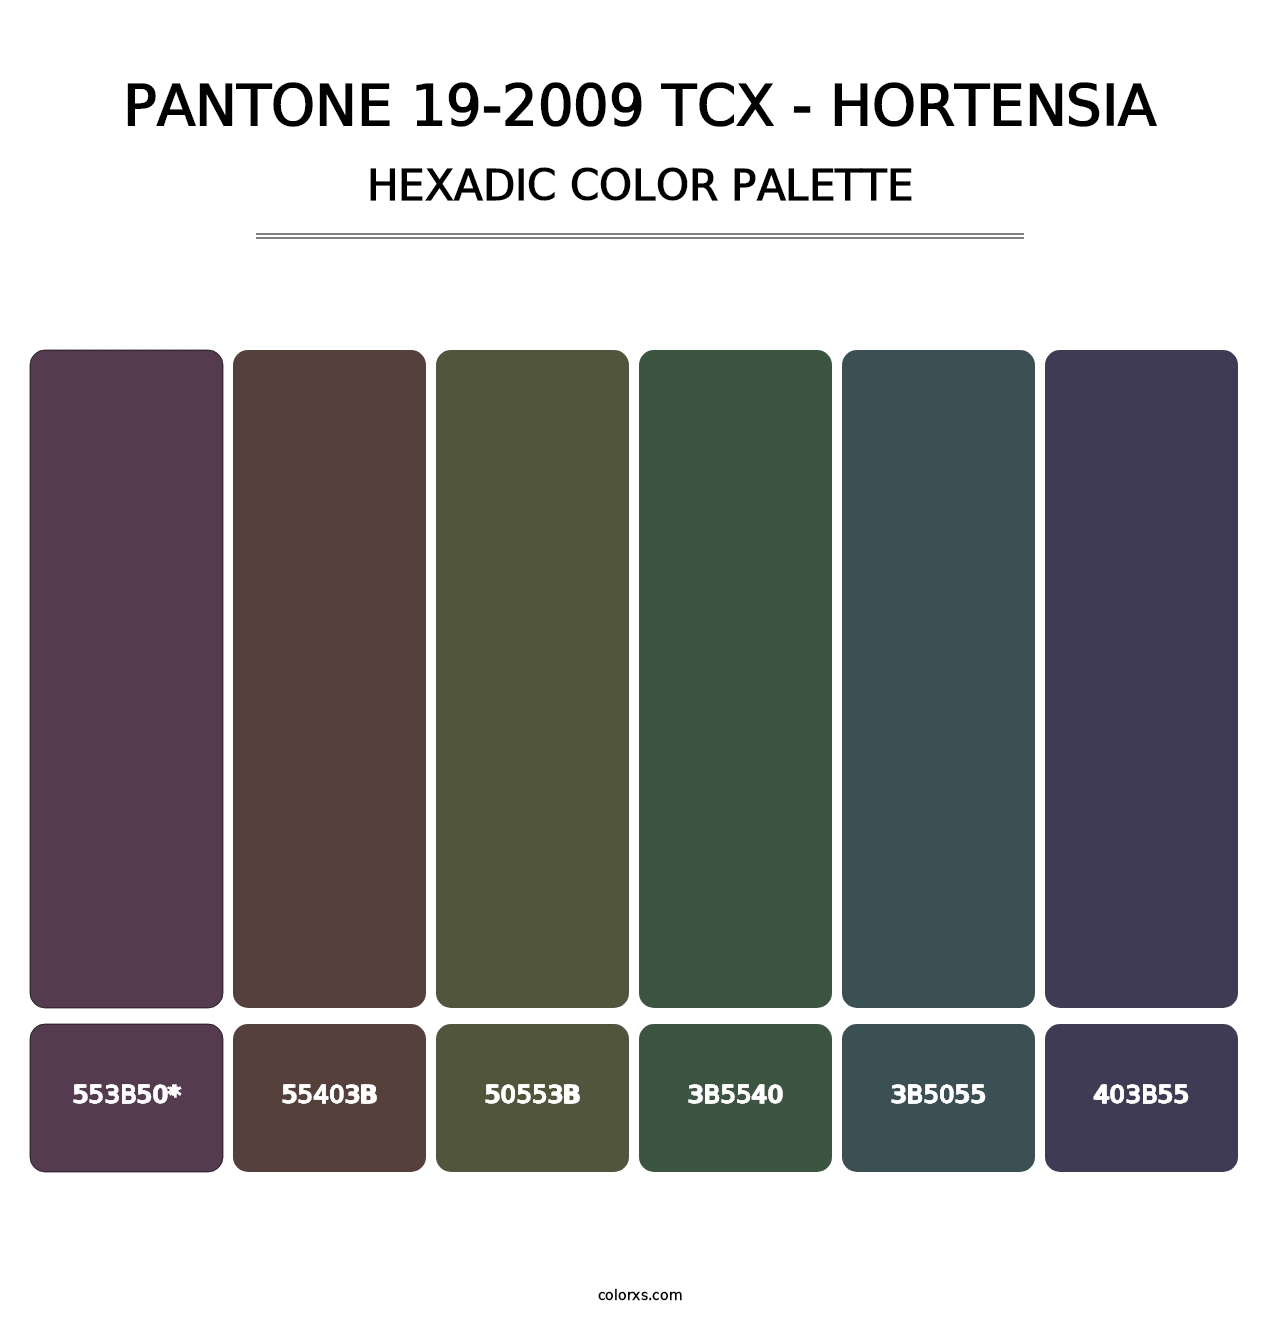 PANTONE 19-2009 TCX - Hortensia - Hexadic Color Palette